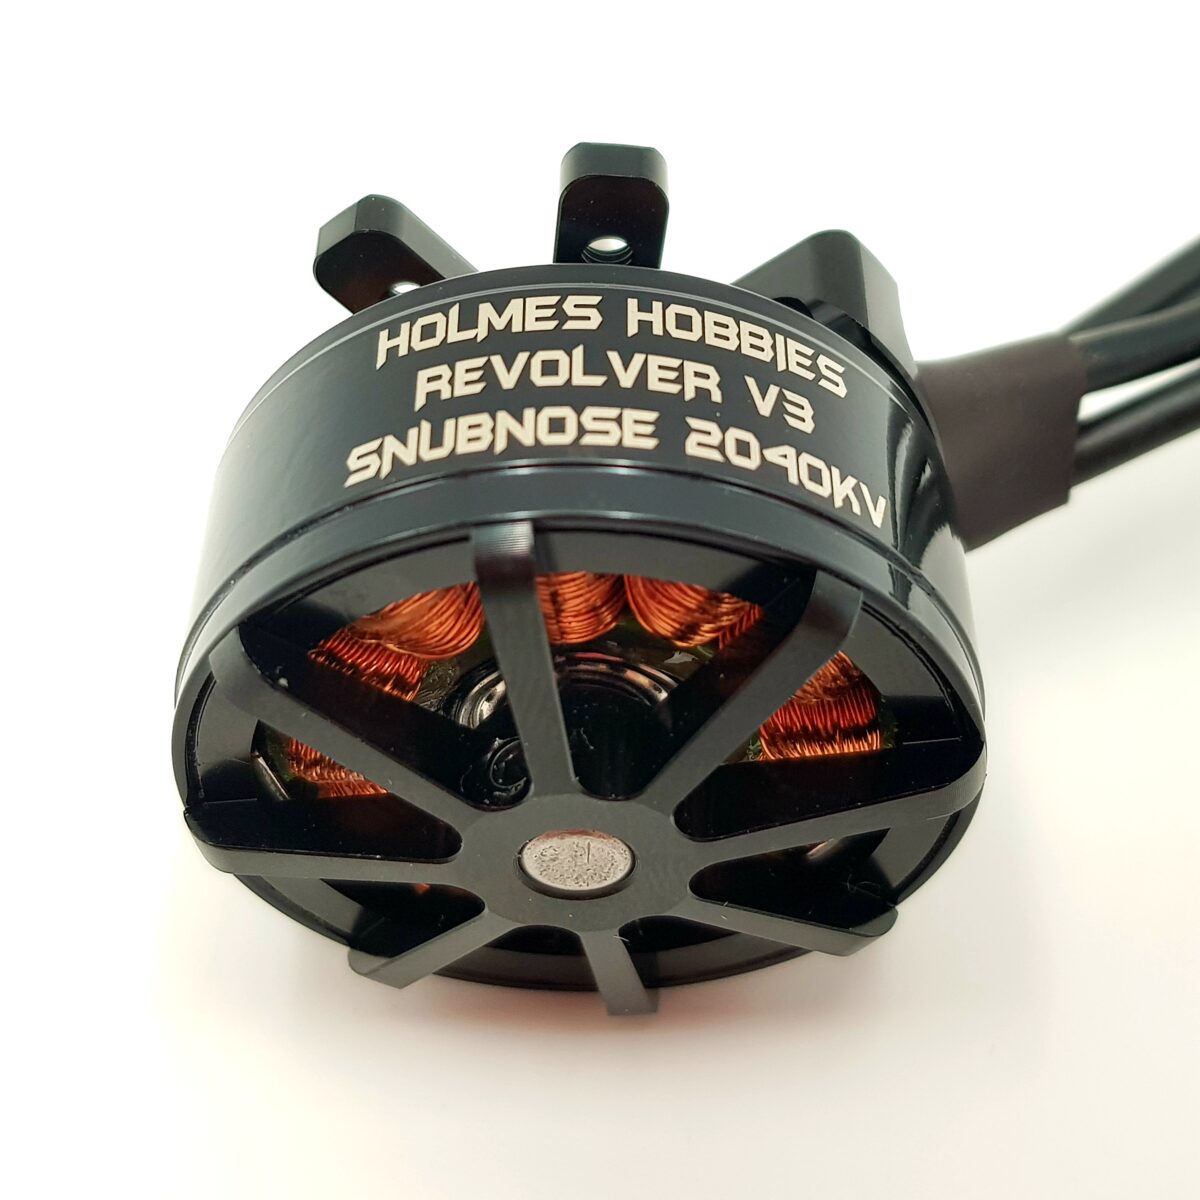 Holmes Hobbies Revolver V3 Snubnose 2040KV